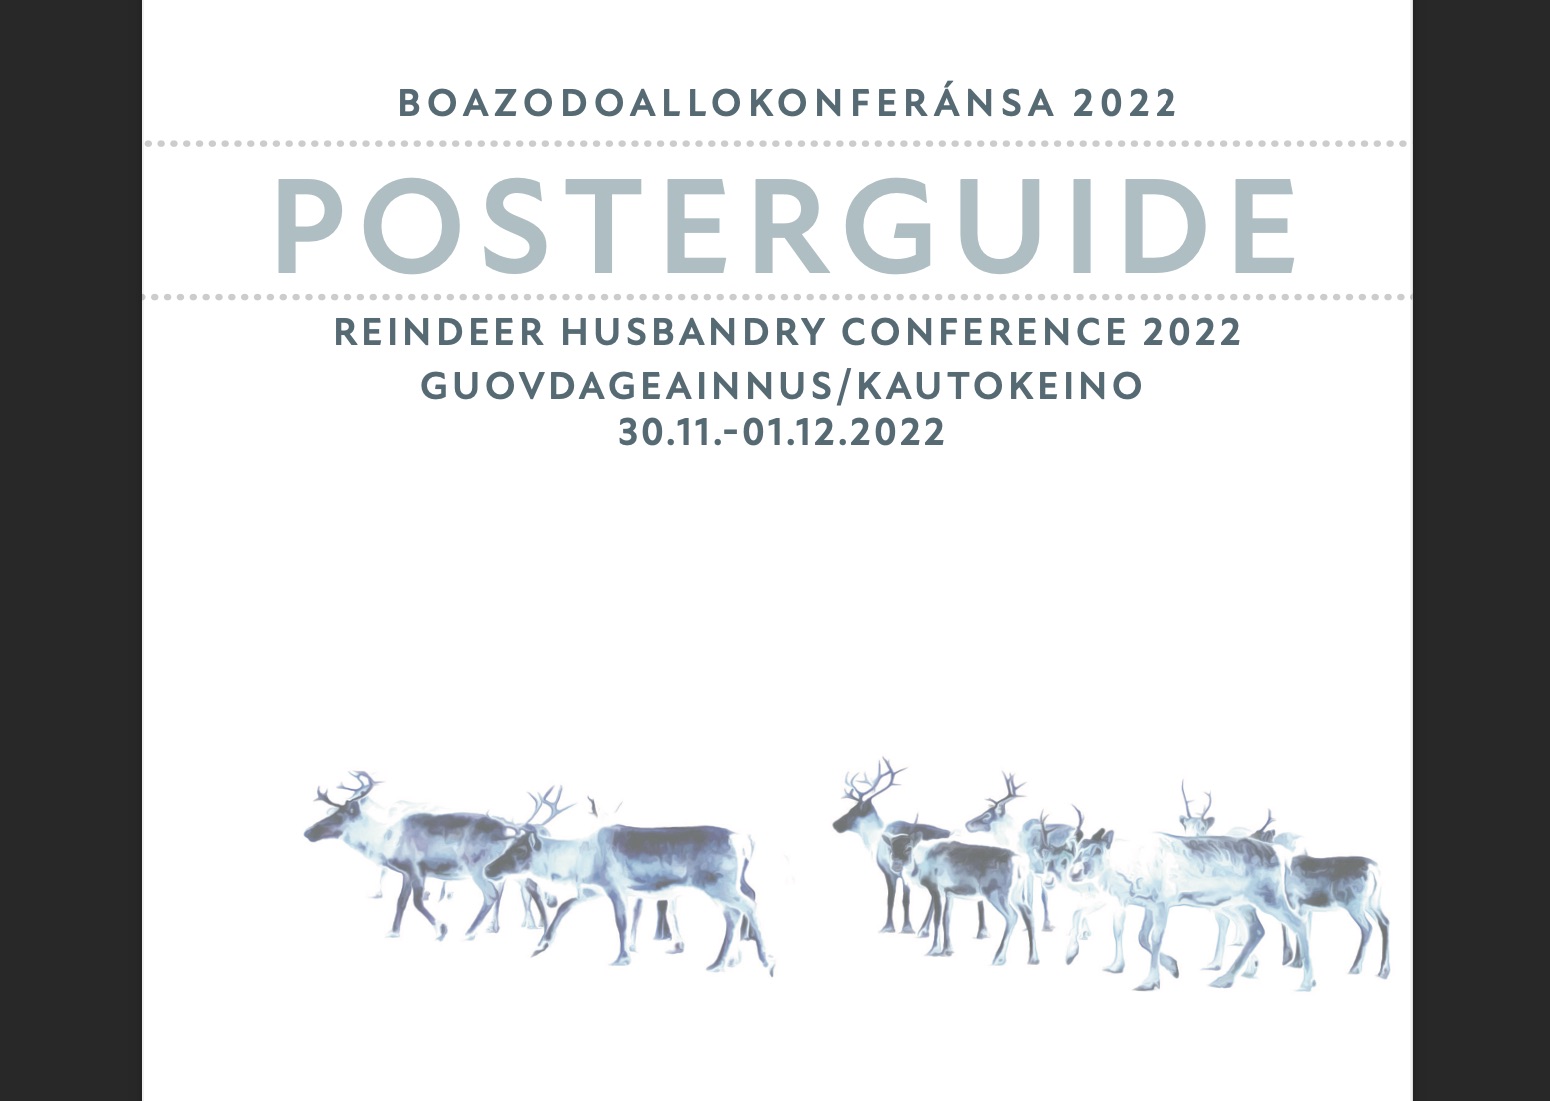 posterguide reindeer conf2022